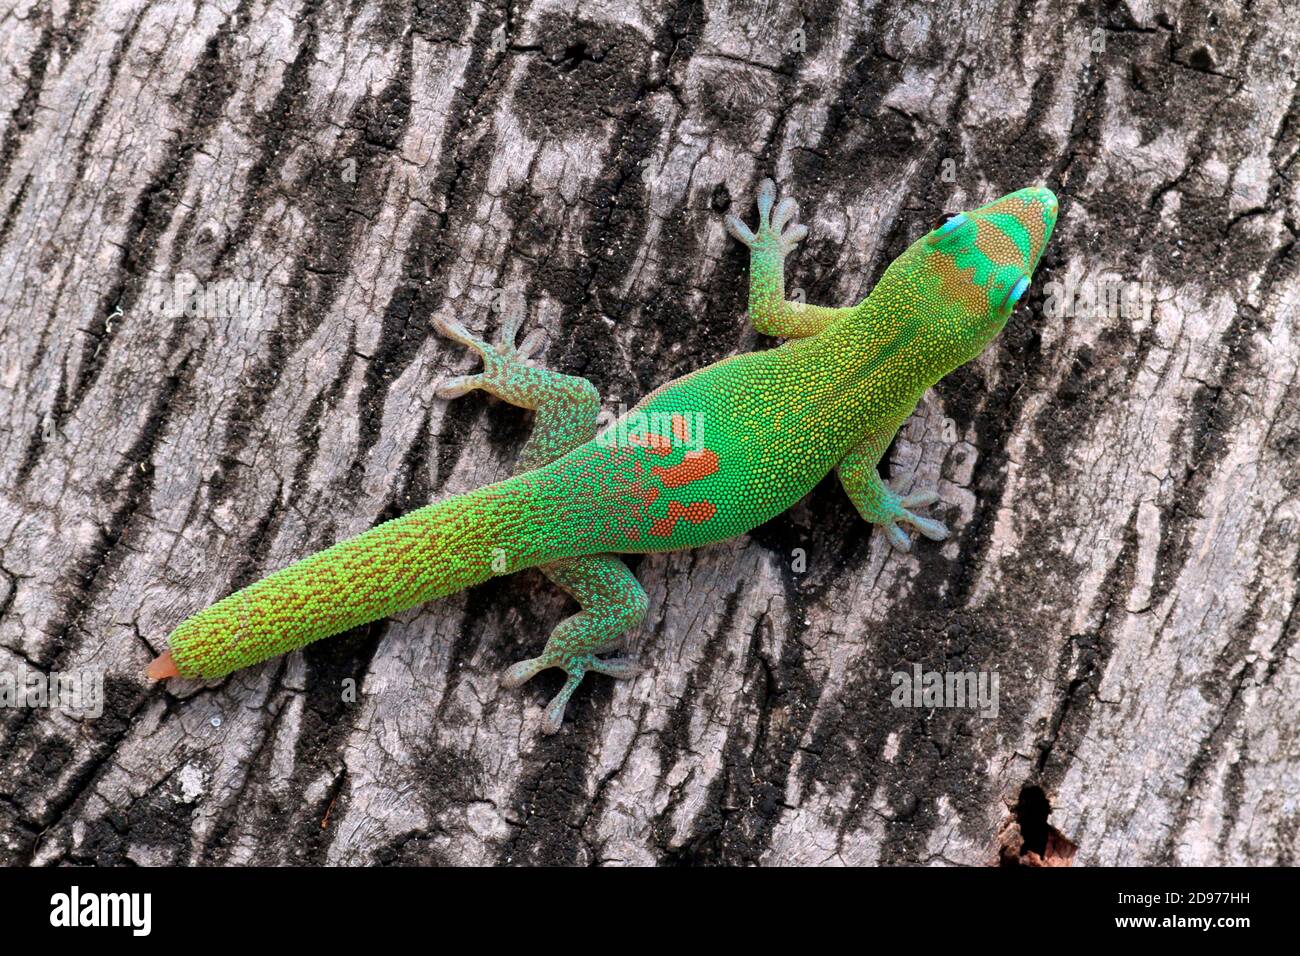 Gold Dust Day Gecko (Phelsuma laticauda) on tree trunk, Reunion Stock Photo